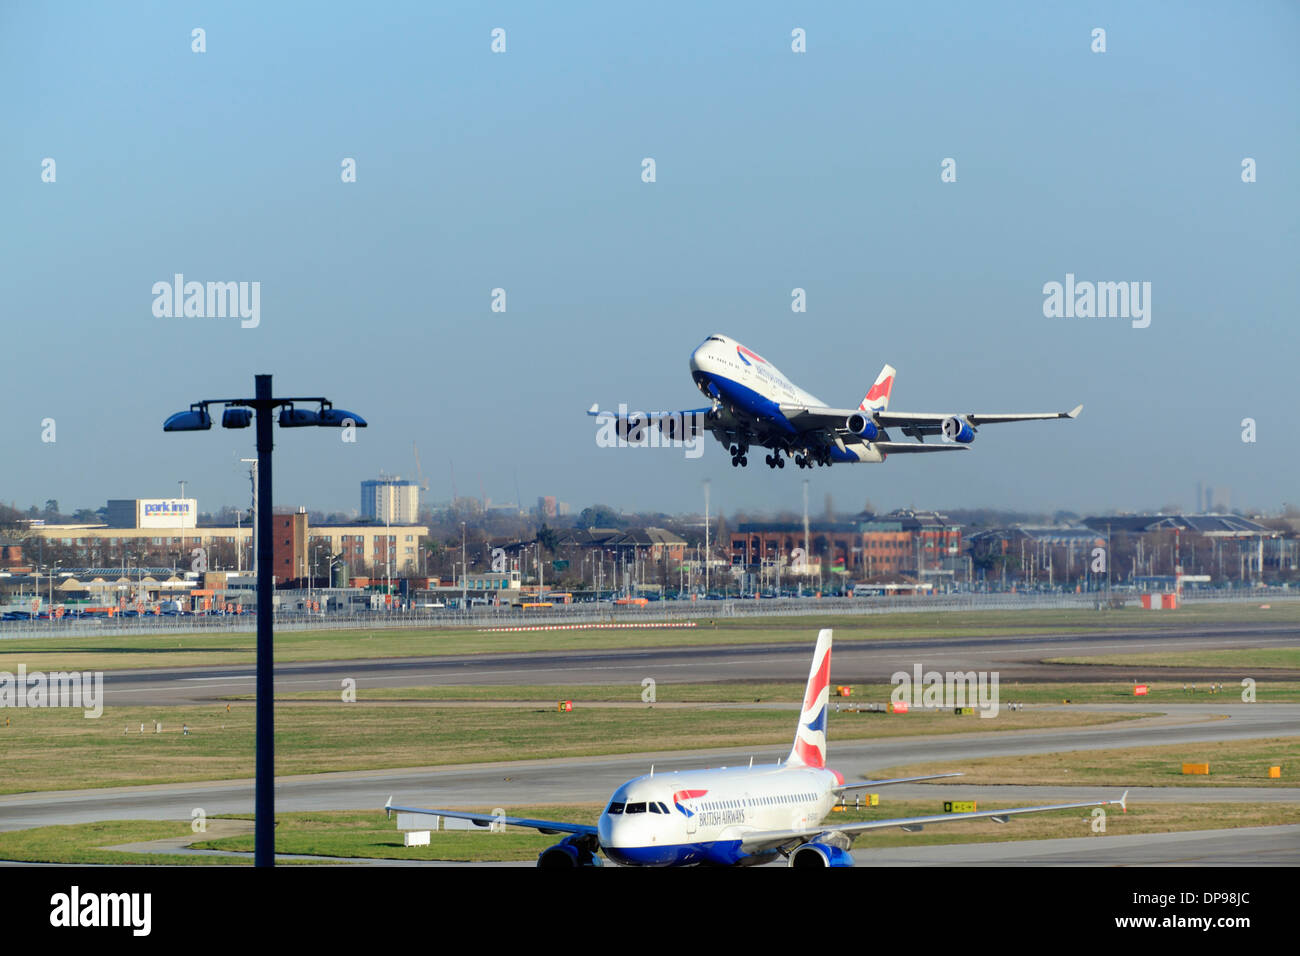 British Airways Boeing 747 takes off at Heathrow Airport runway 27R Stock Photo